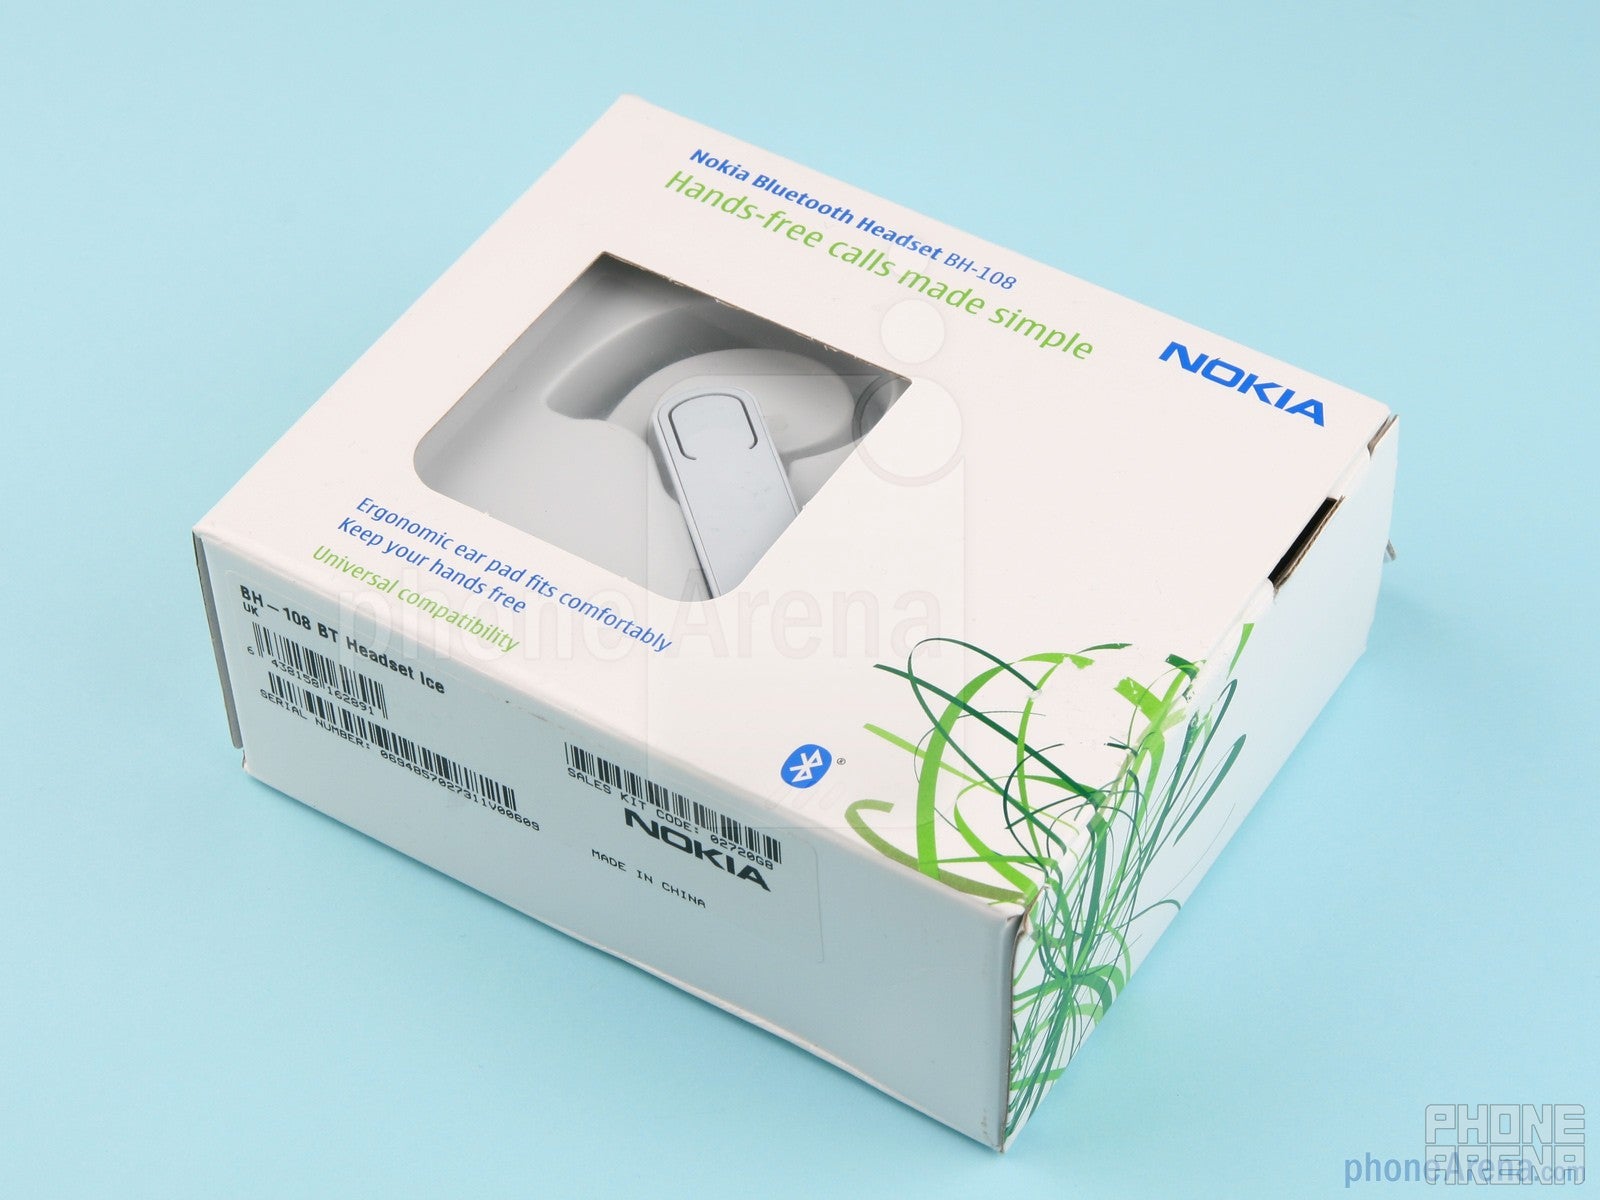 Nokia Bluetooth Headset BH-108 Review